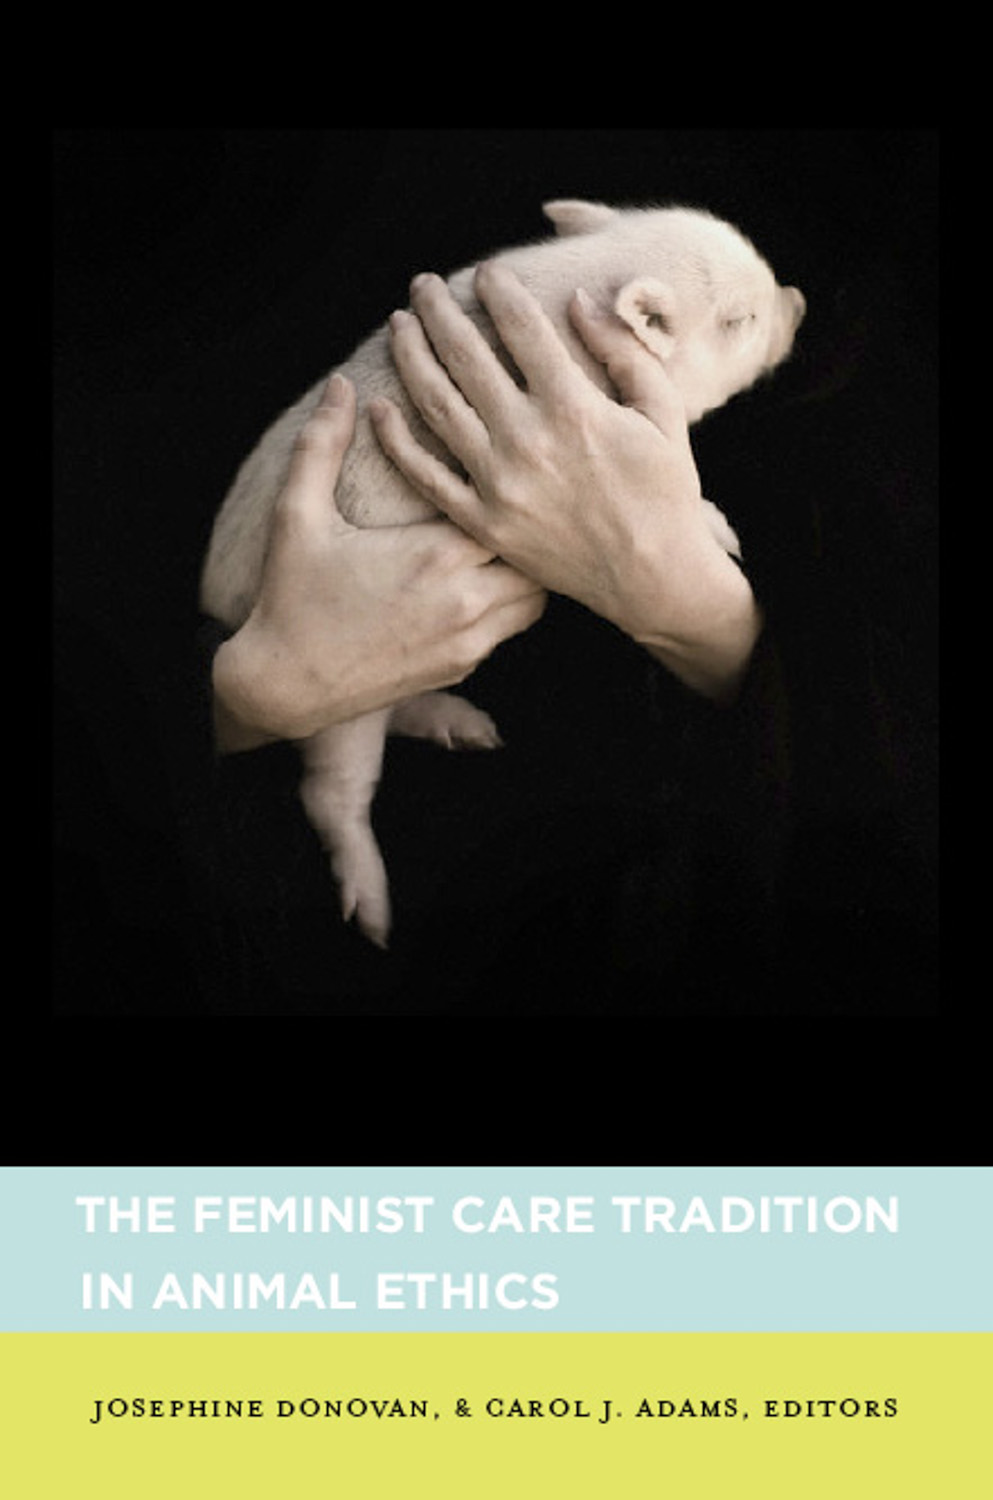 Ecofeminist Books — Carol J. Adams